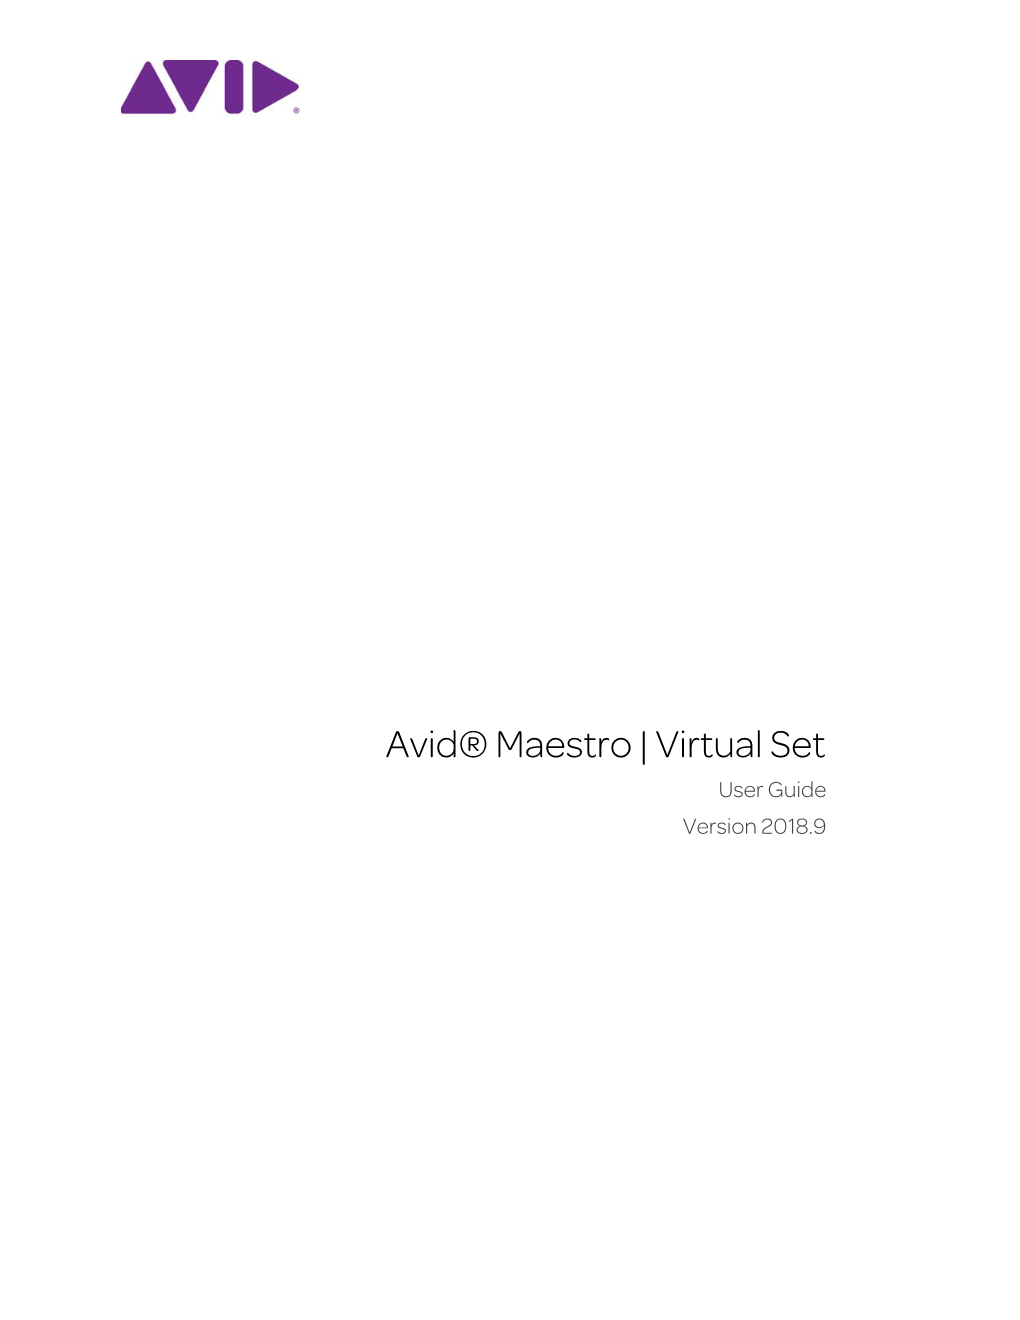 Avid Maestro | Virtual Set User Guide V2018.9